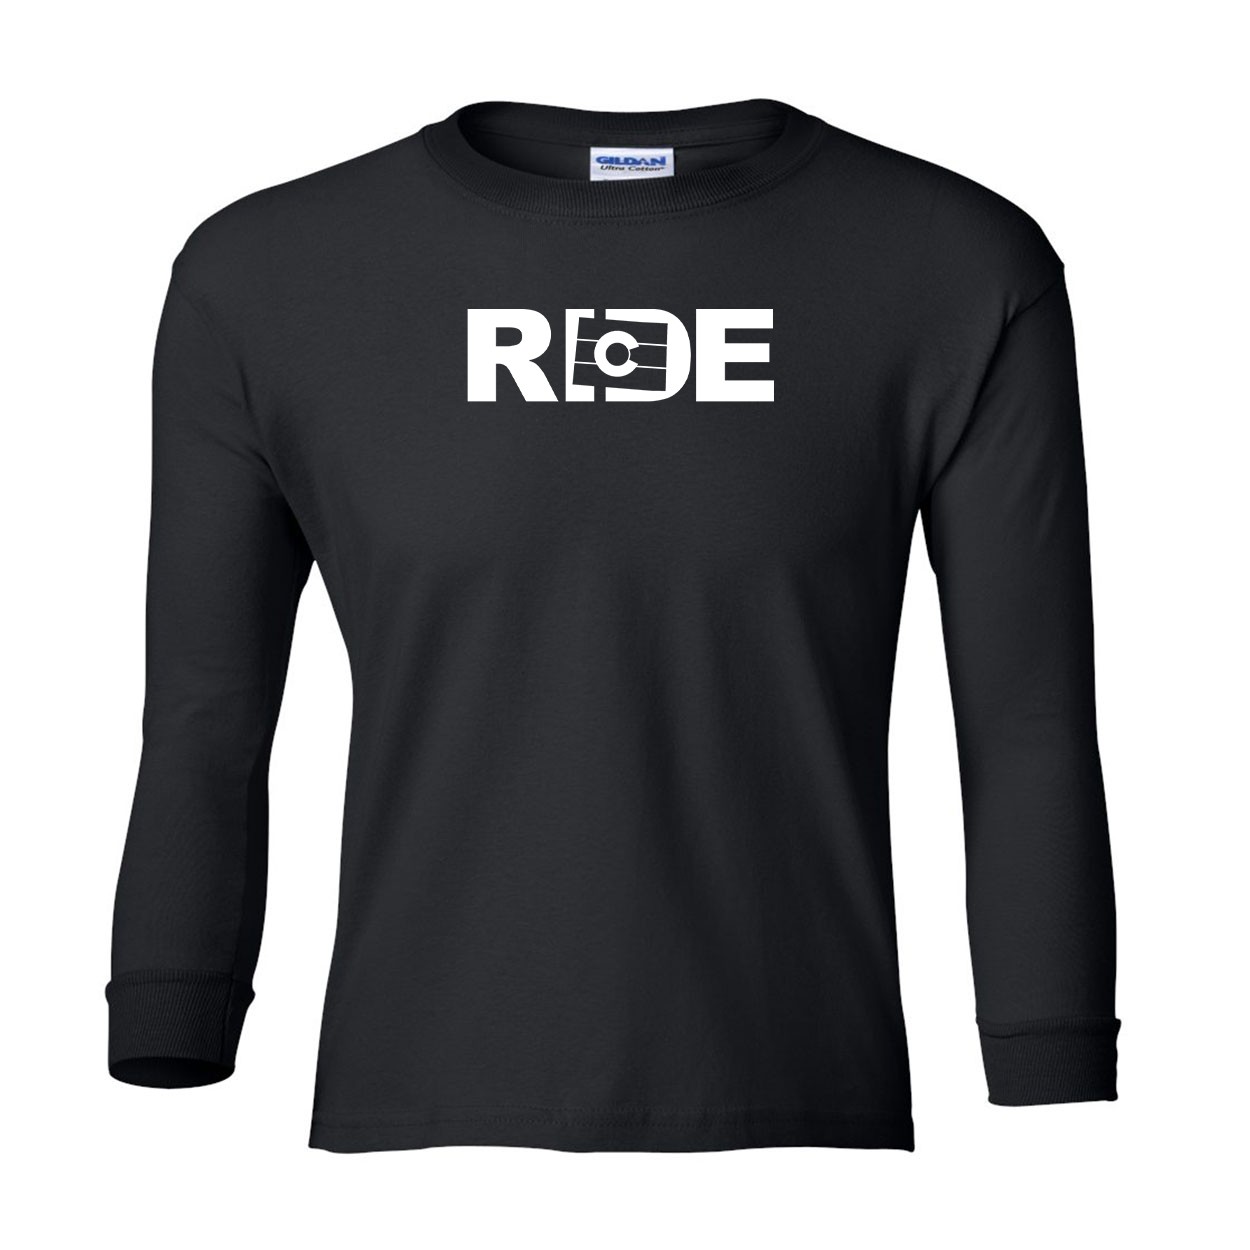 Ride Colorado Classic Youth Unisex Long Sleeve T-Shirt Black (White Logo)